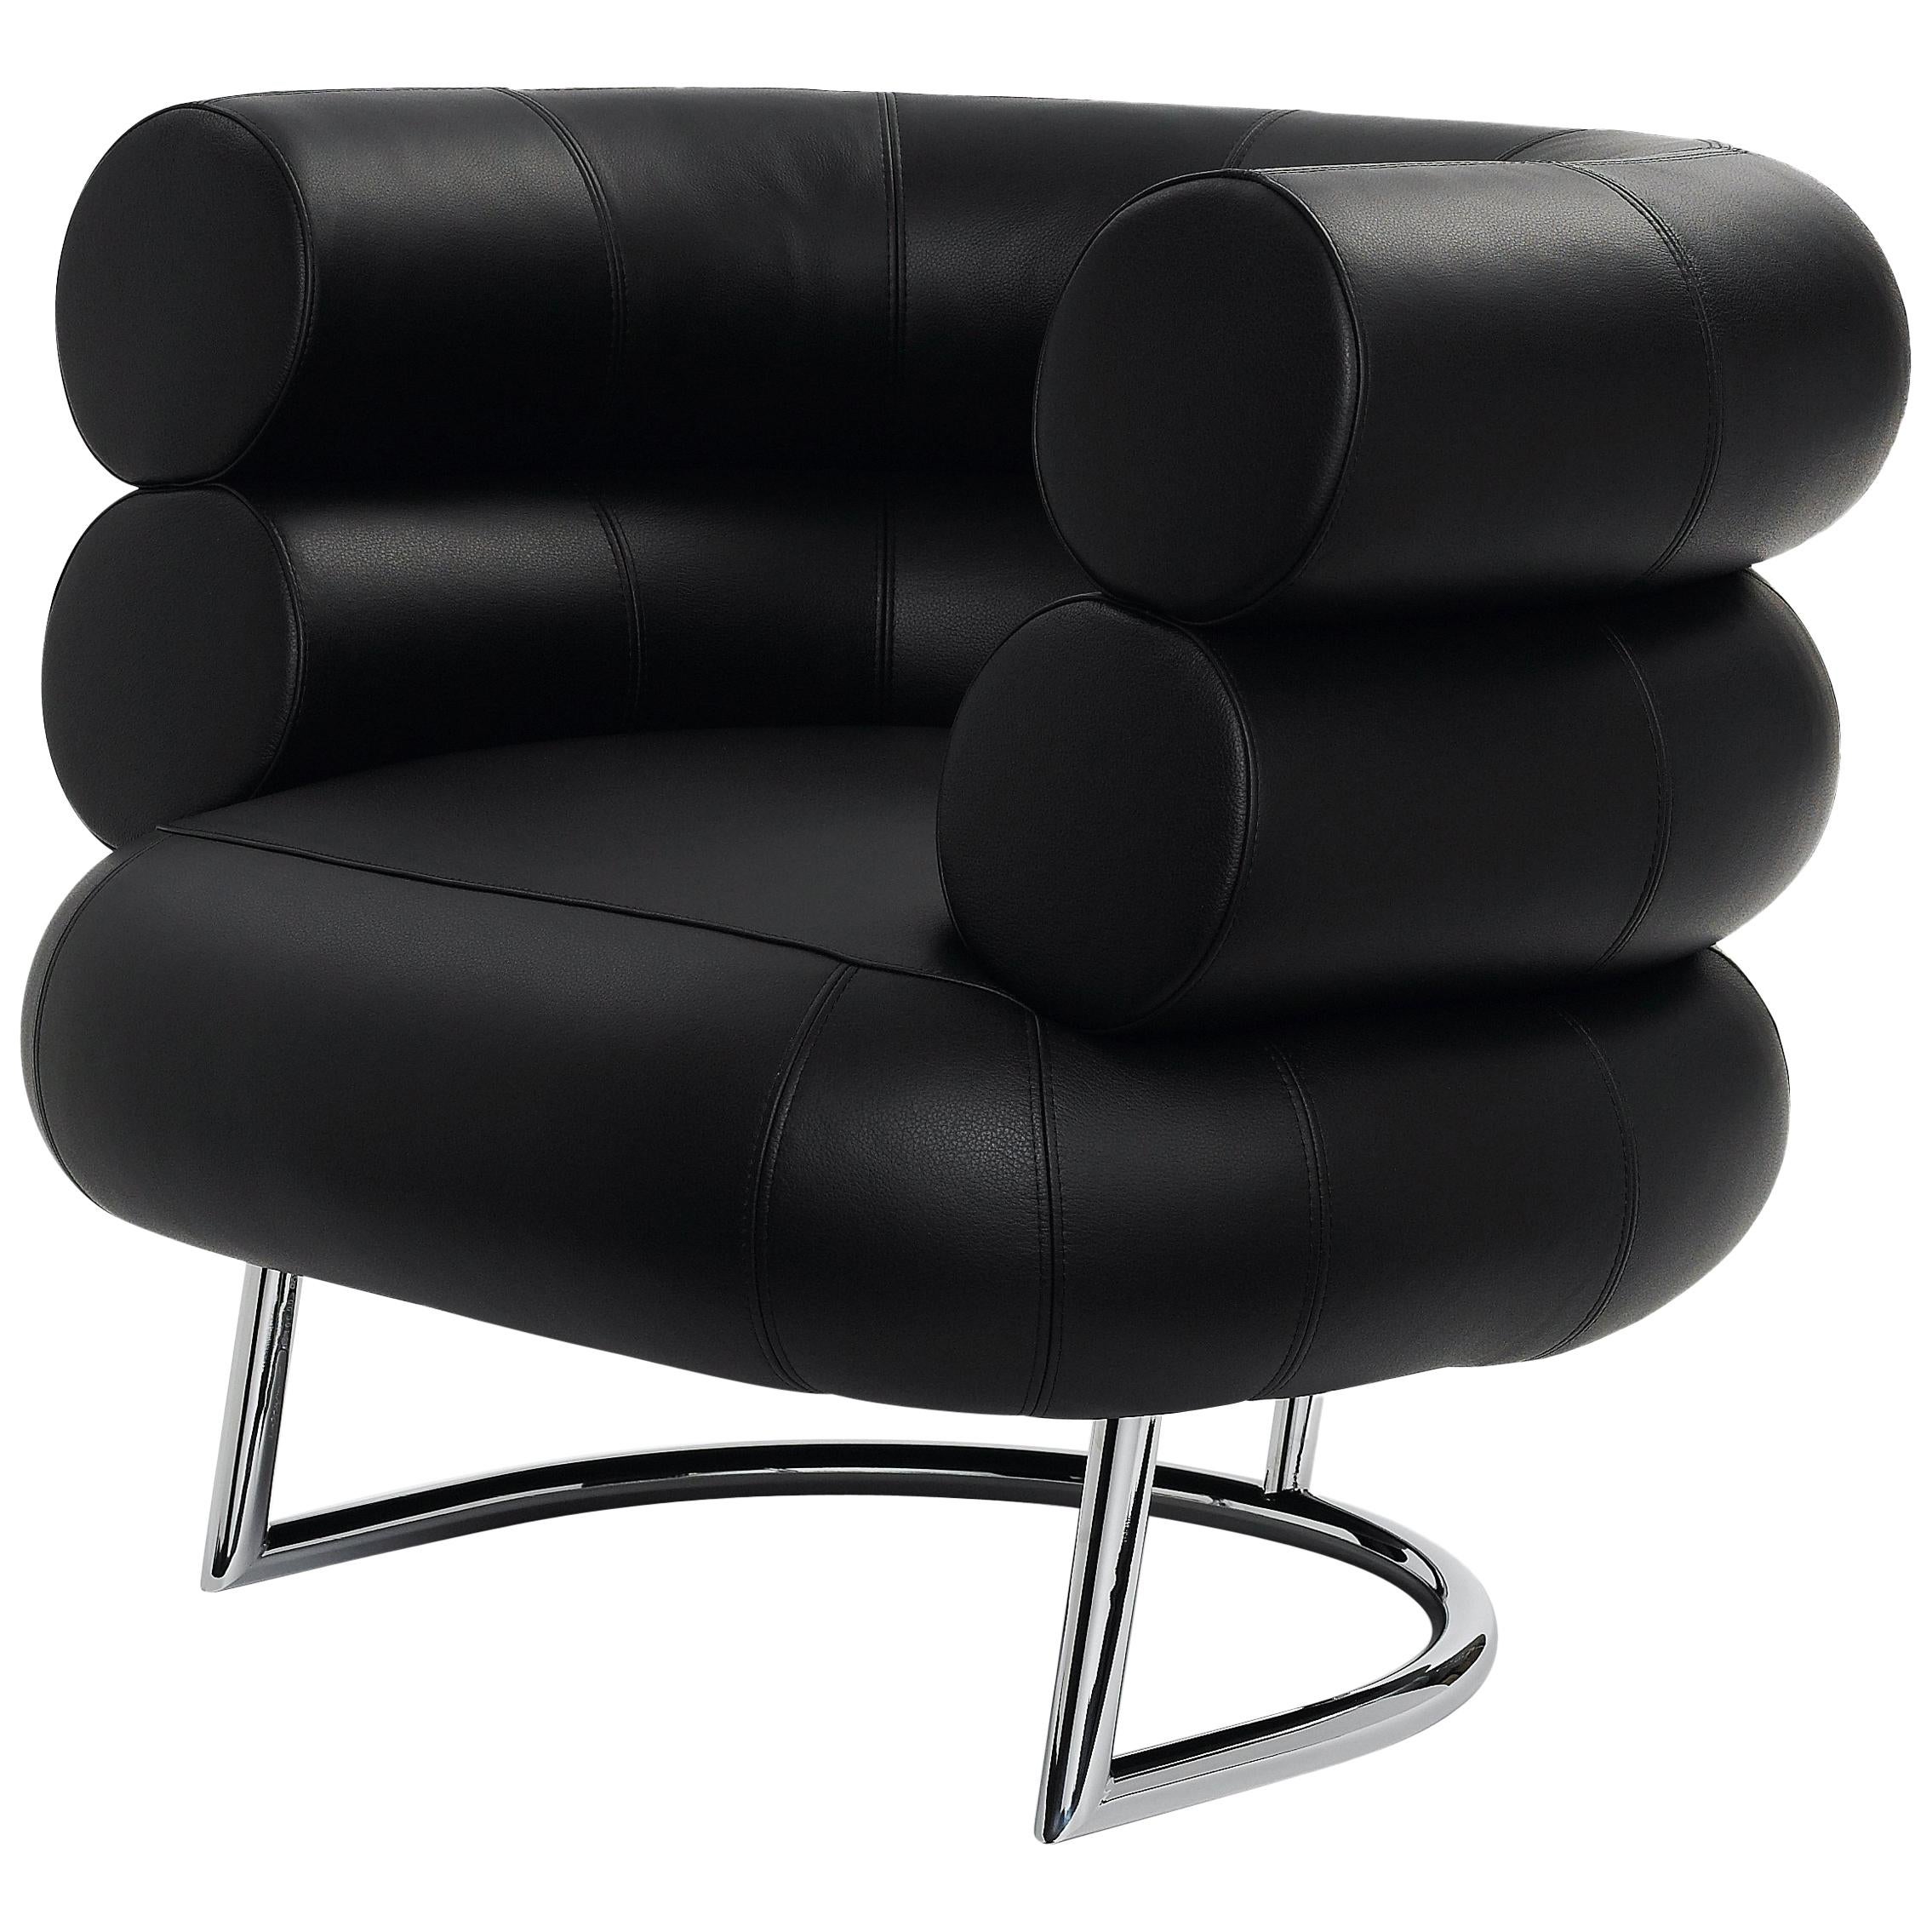 Customizable ClassiCon Bibendum Lounge Chair by Eileen Gray